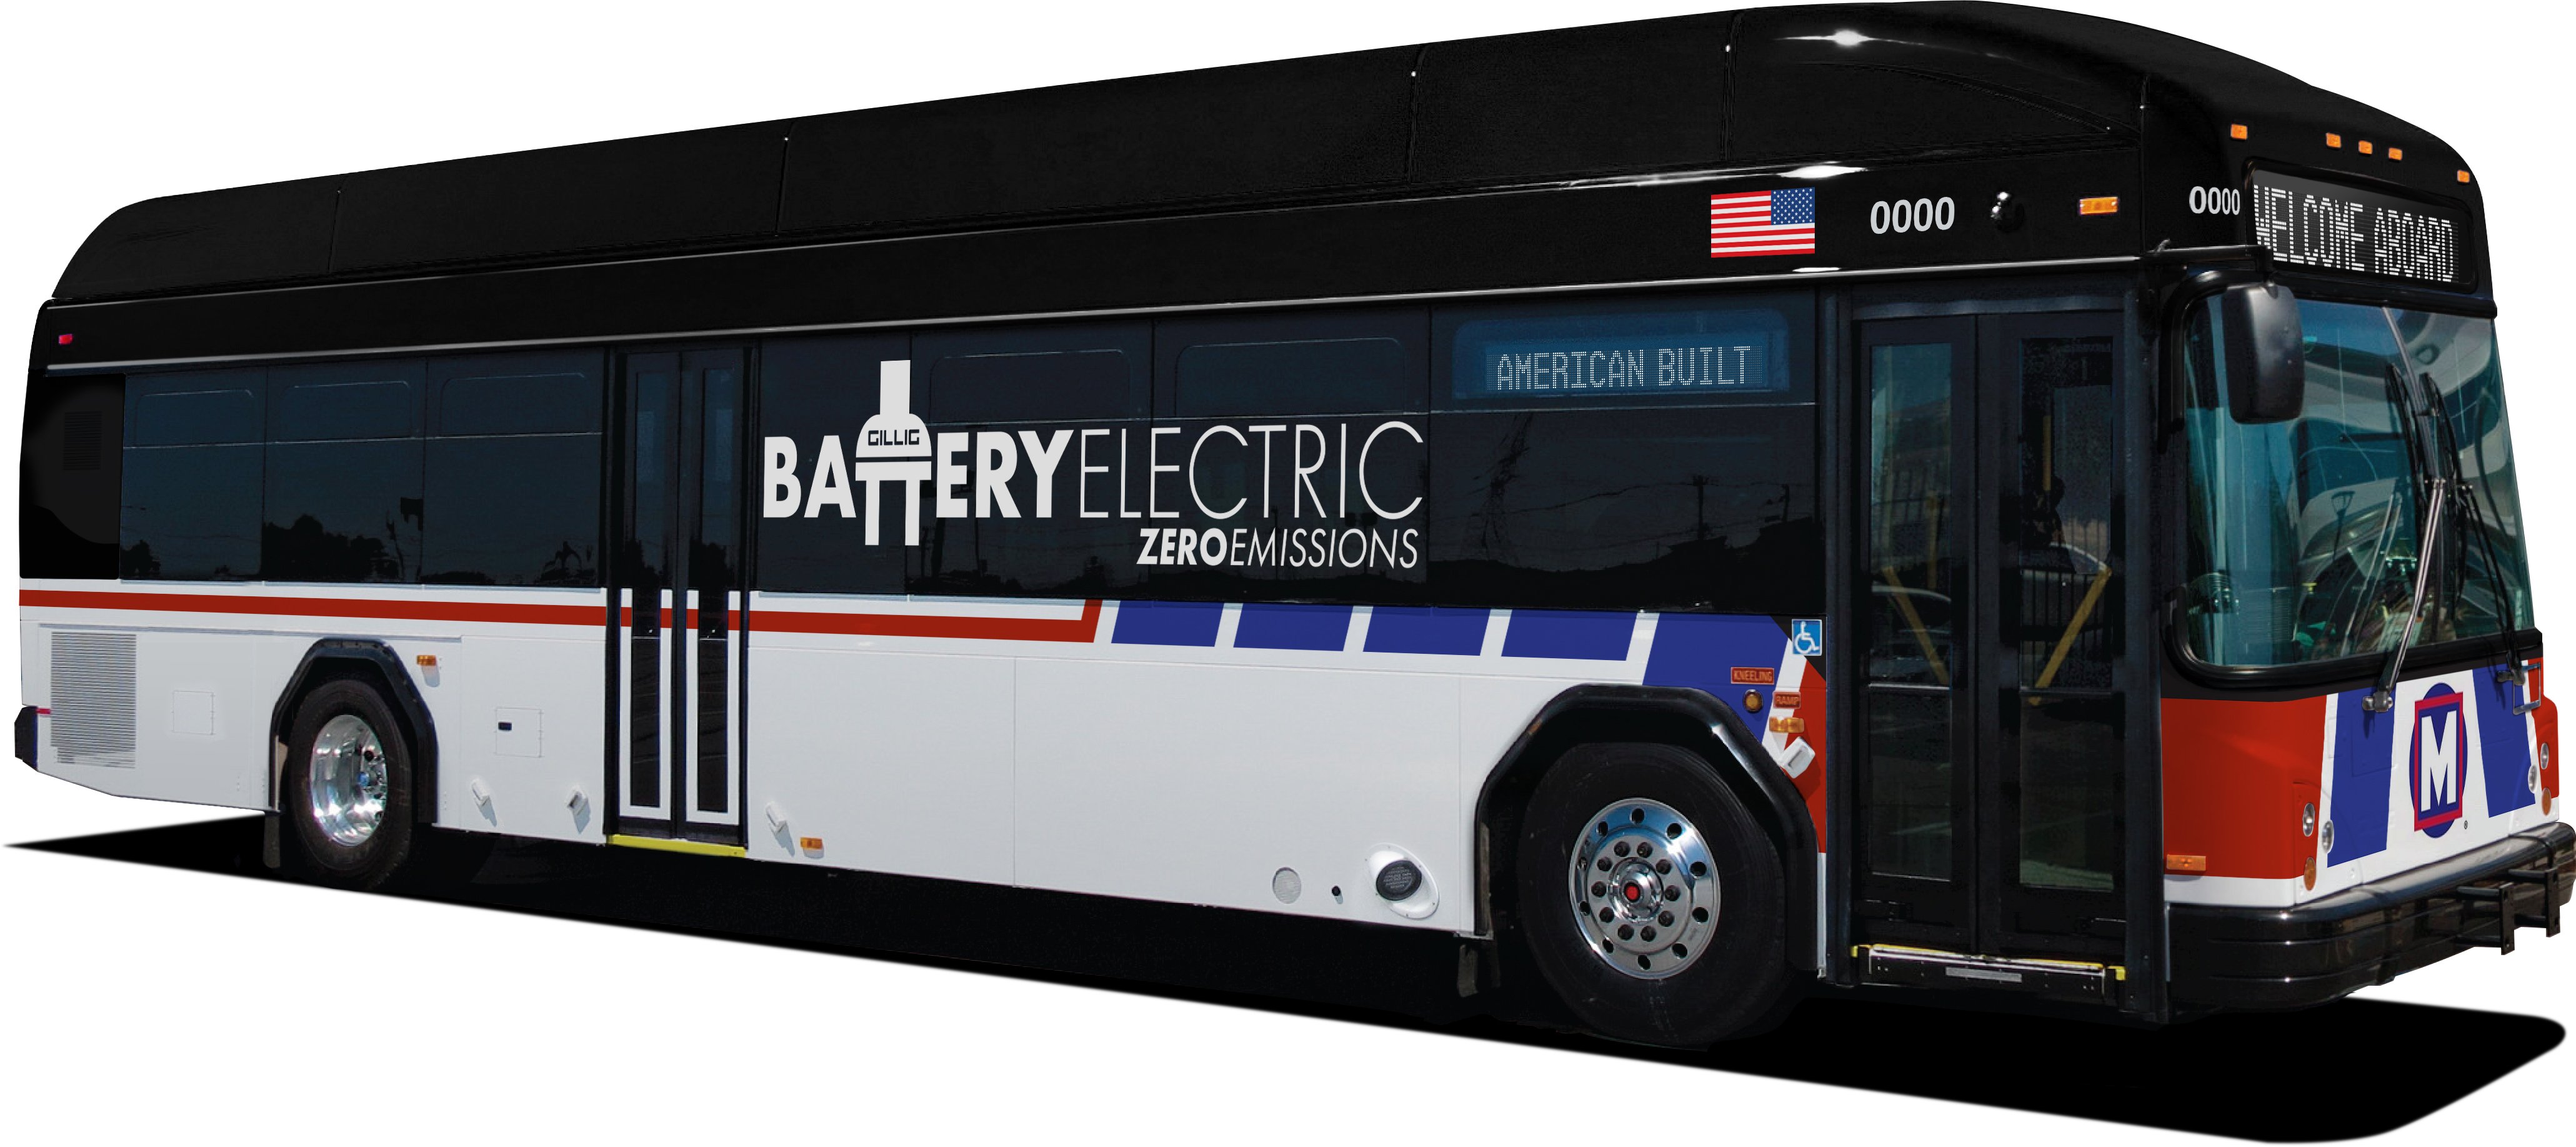 Metro to Add Electric Bus Technology to Fleet in 2020 - Metrostlouis.org Site | Metro ...4122 x 1835